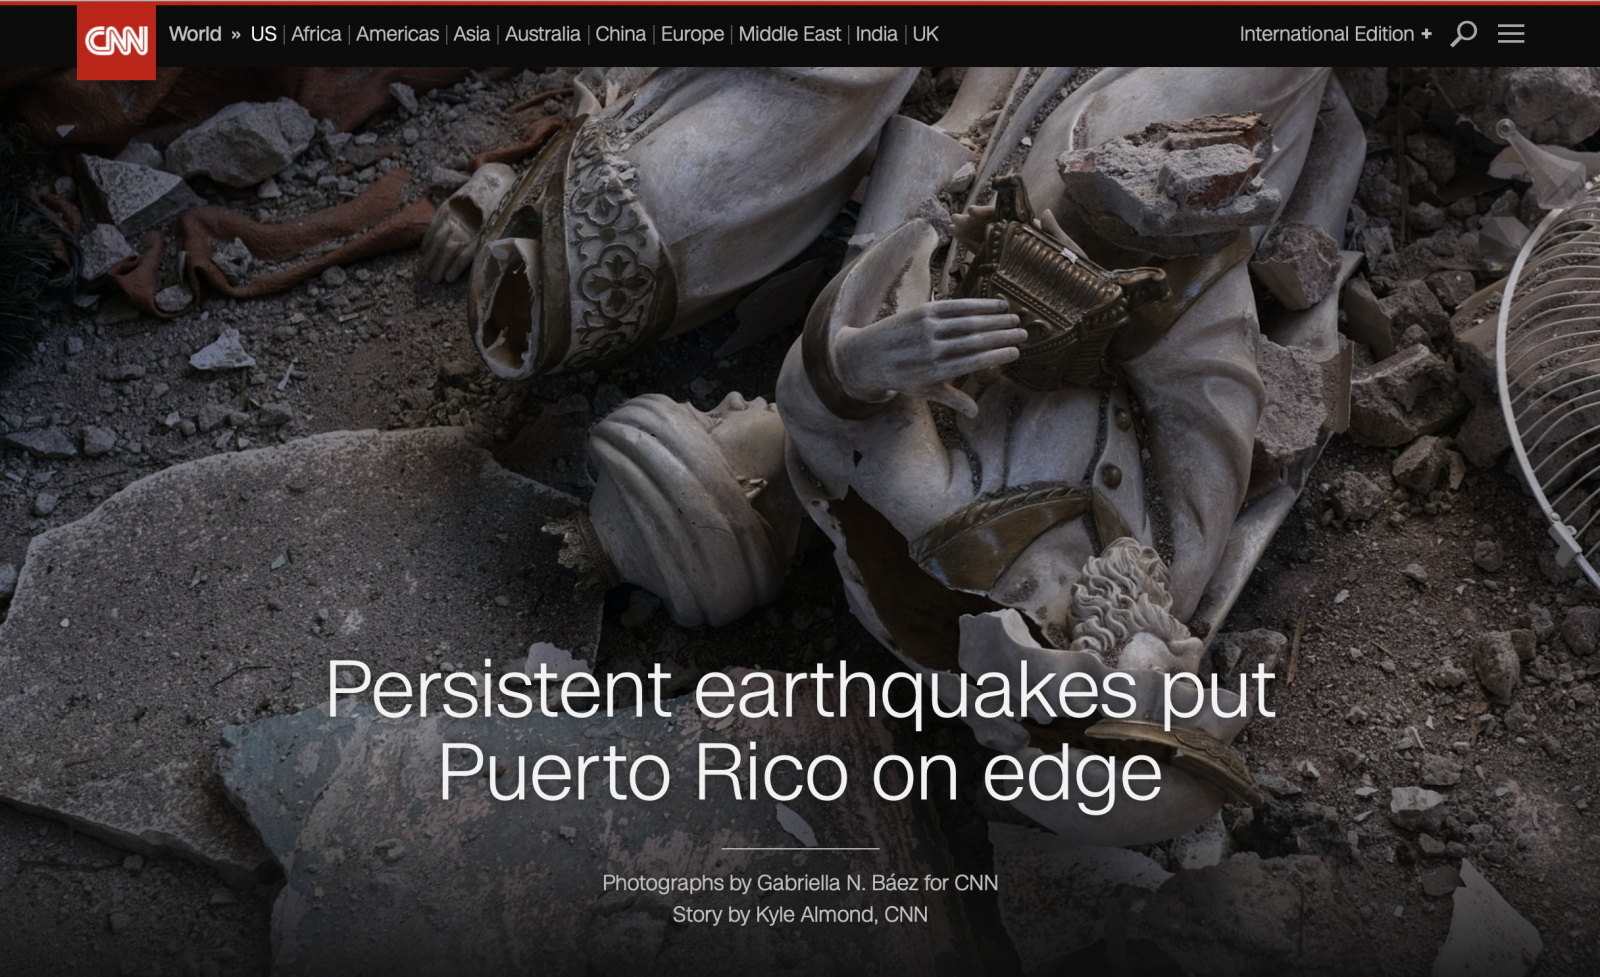 Puerto Rico Earthquakes Coverage for CNN